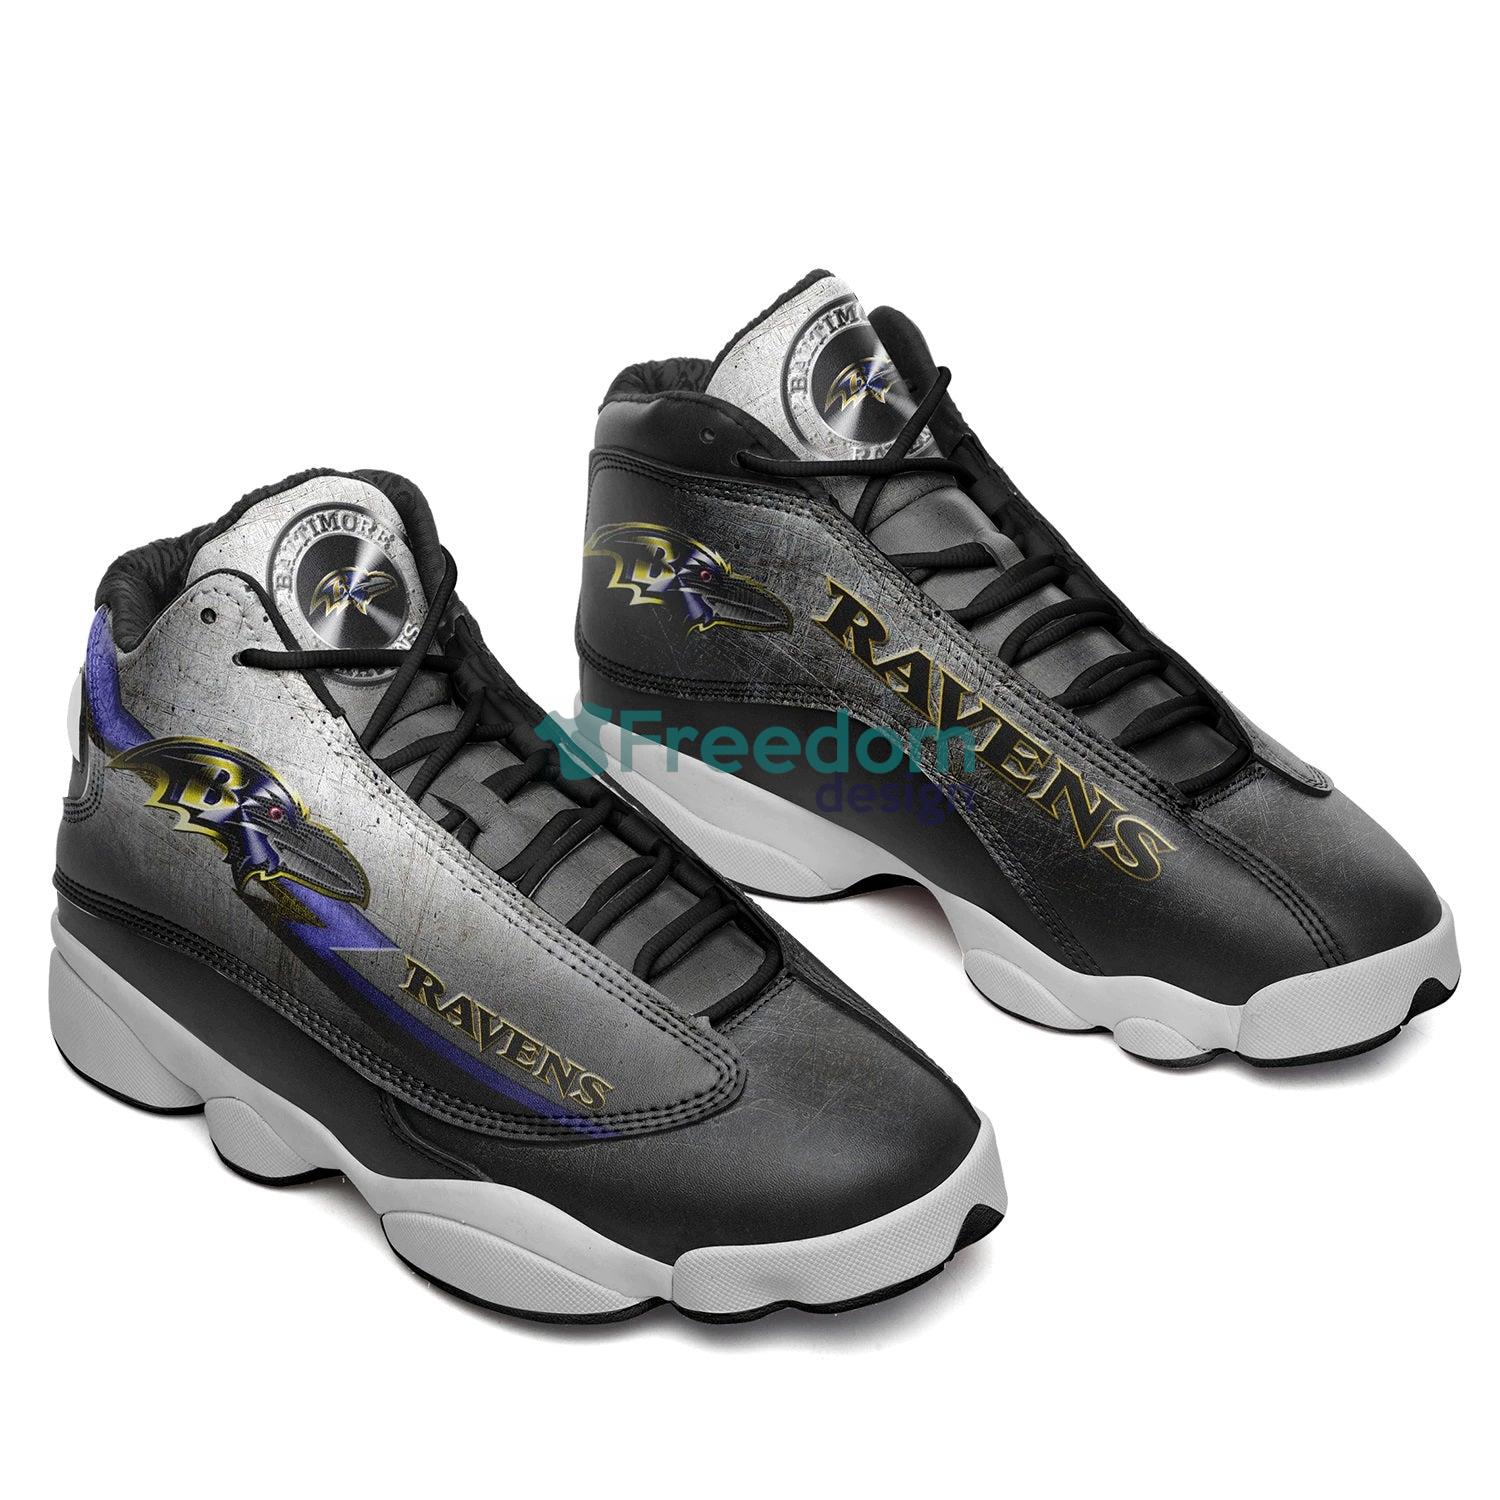 Baltimore Ravens Air Jordan 13 Sneaker Shoes For Fans